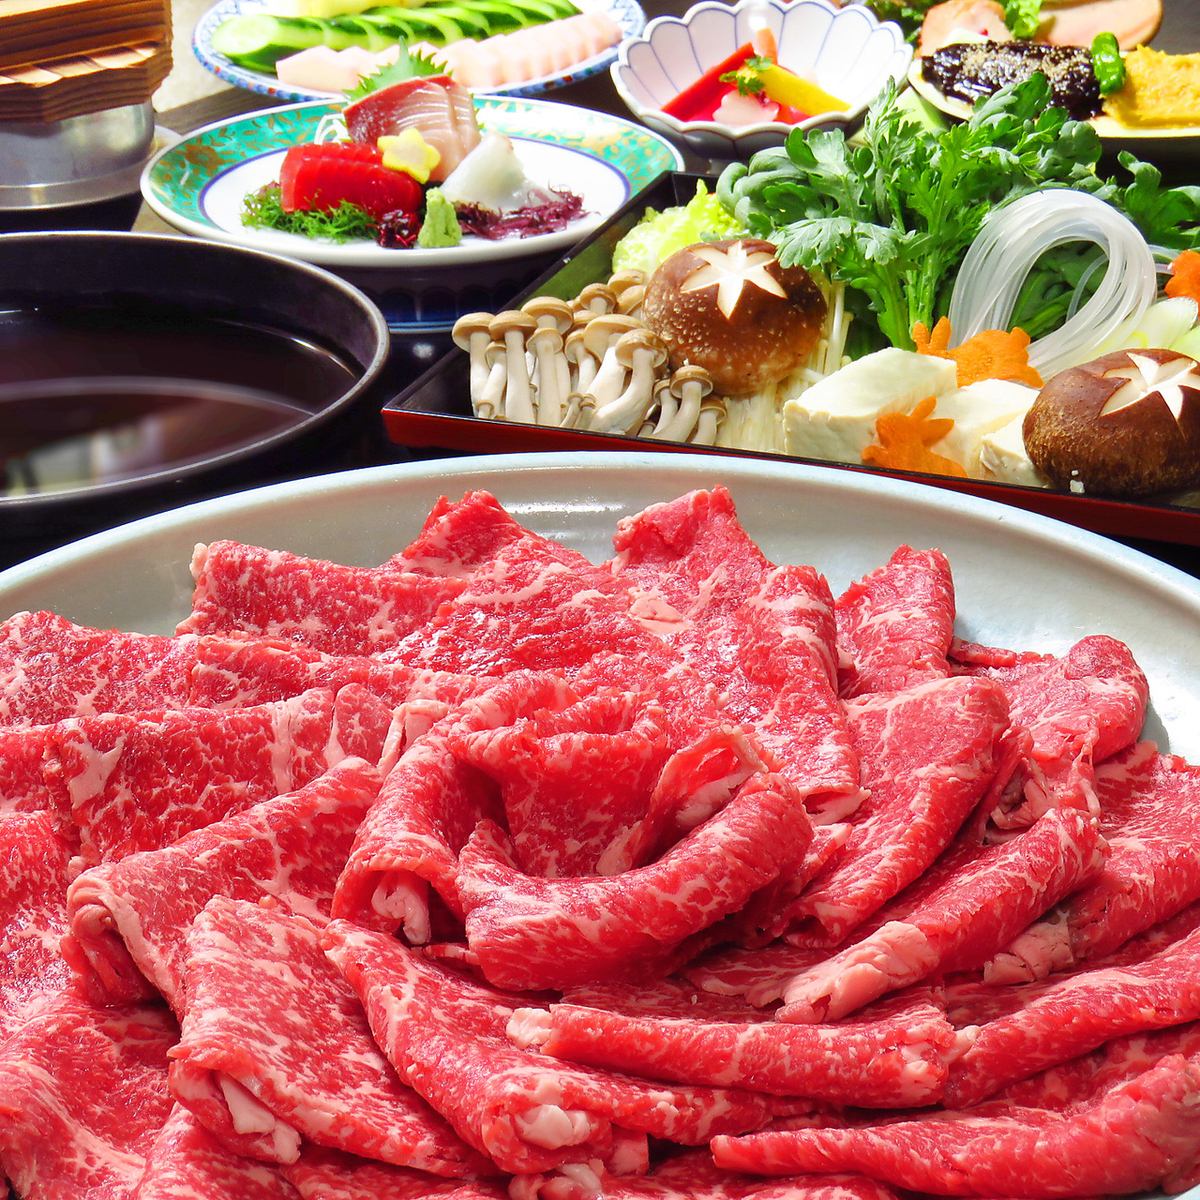 Unme beef shabu-shabu or sukiyaki course 2.5 hours all-you-can-drink 6,000 yen